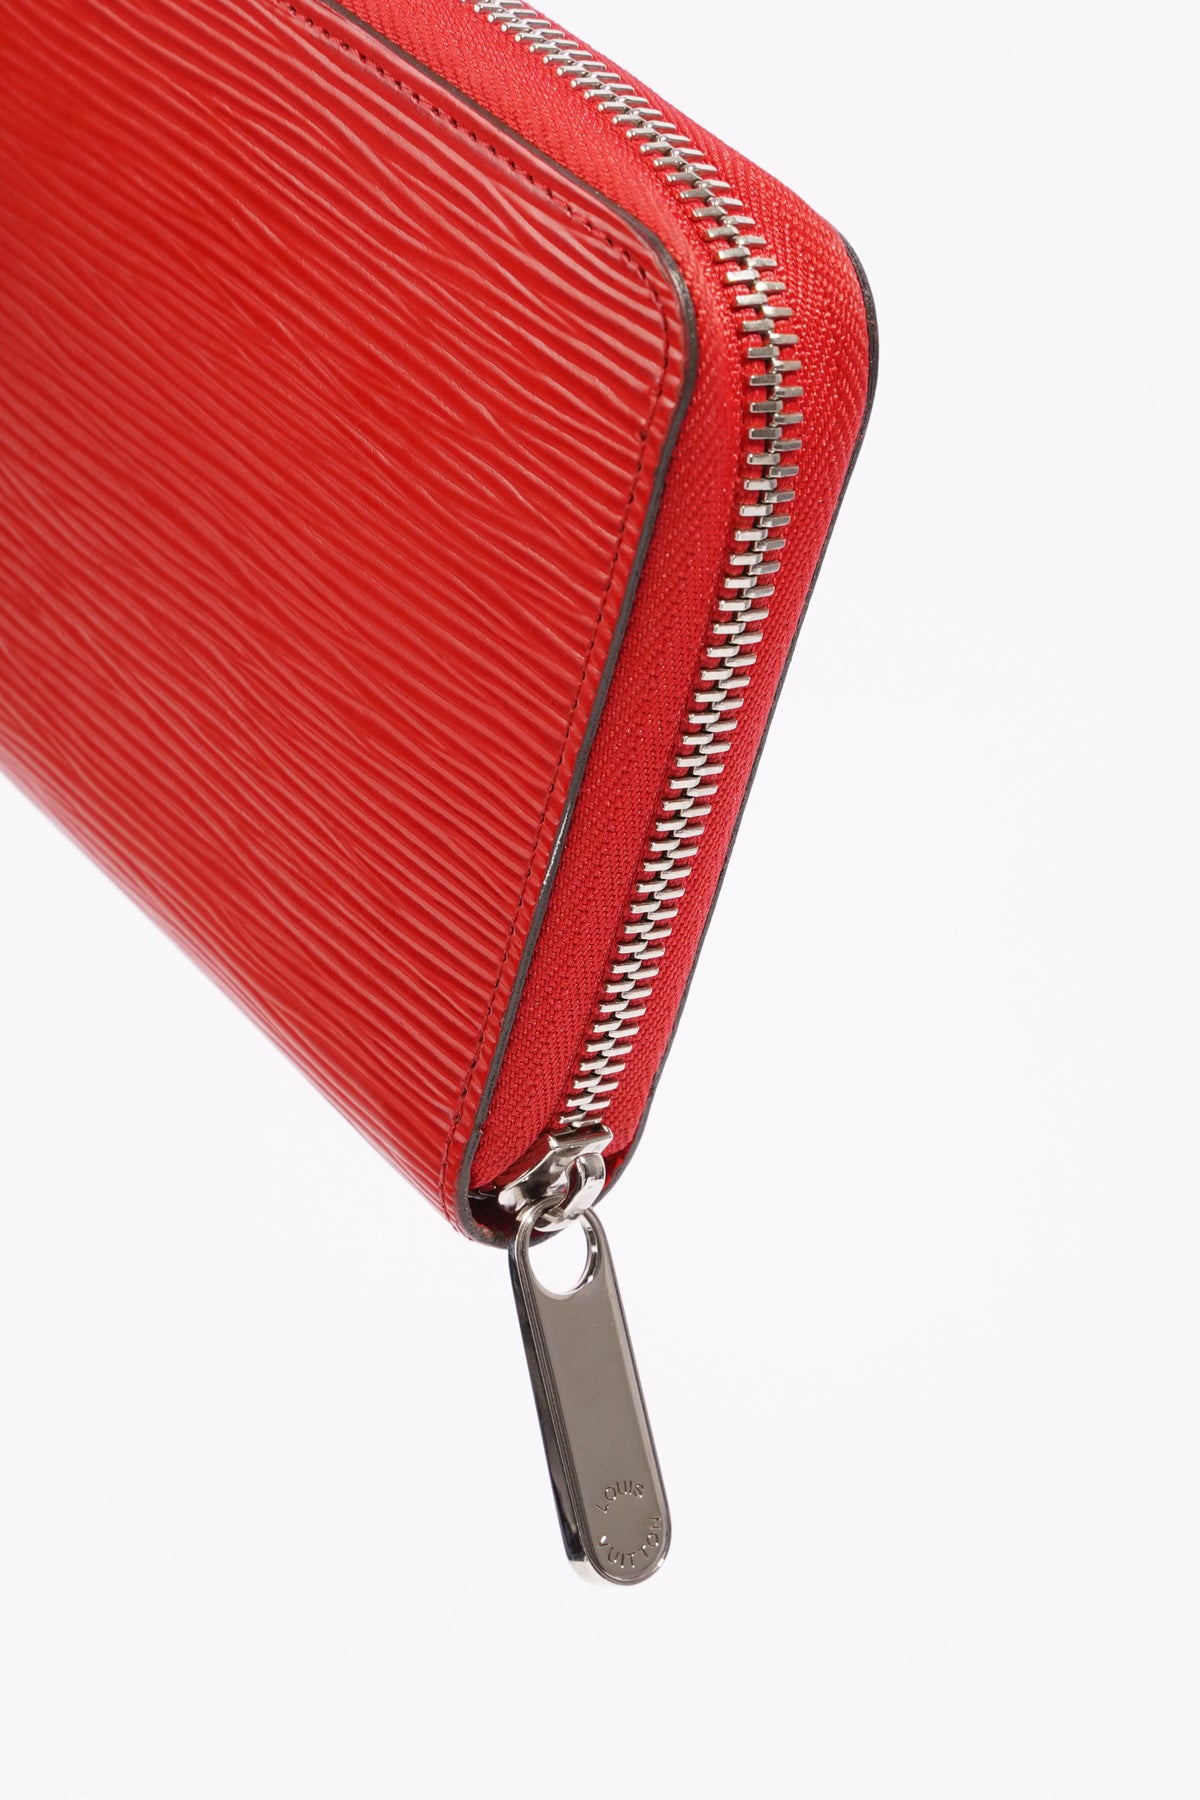 Louis Vuitton Red Epi Leather Zippy Wallet Louis Vuitton | The Luxury Closet